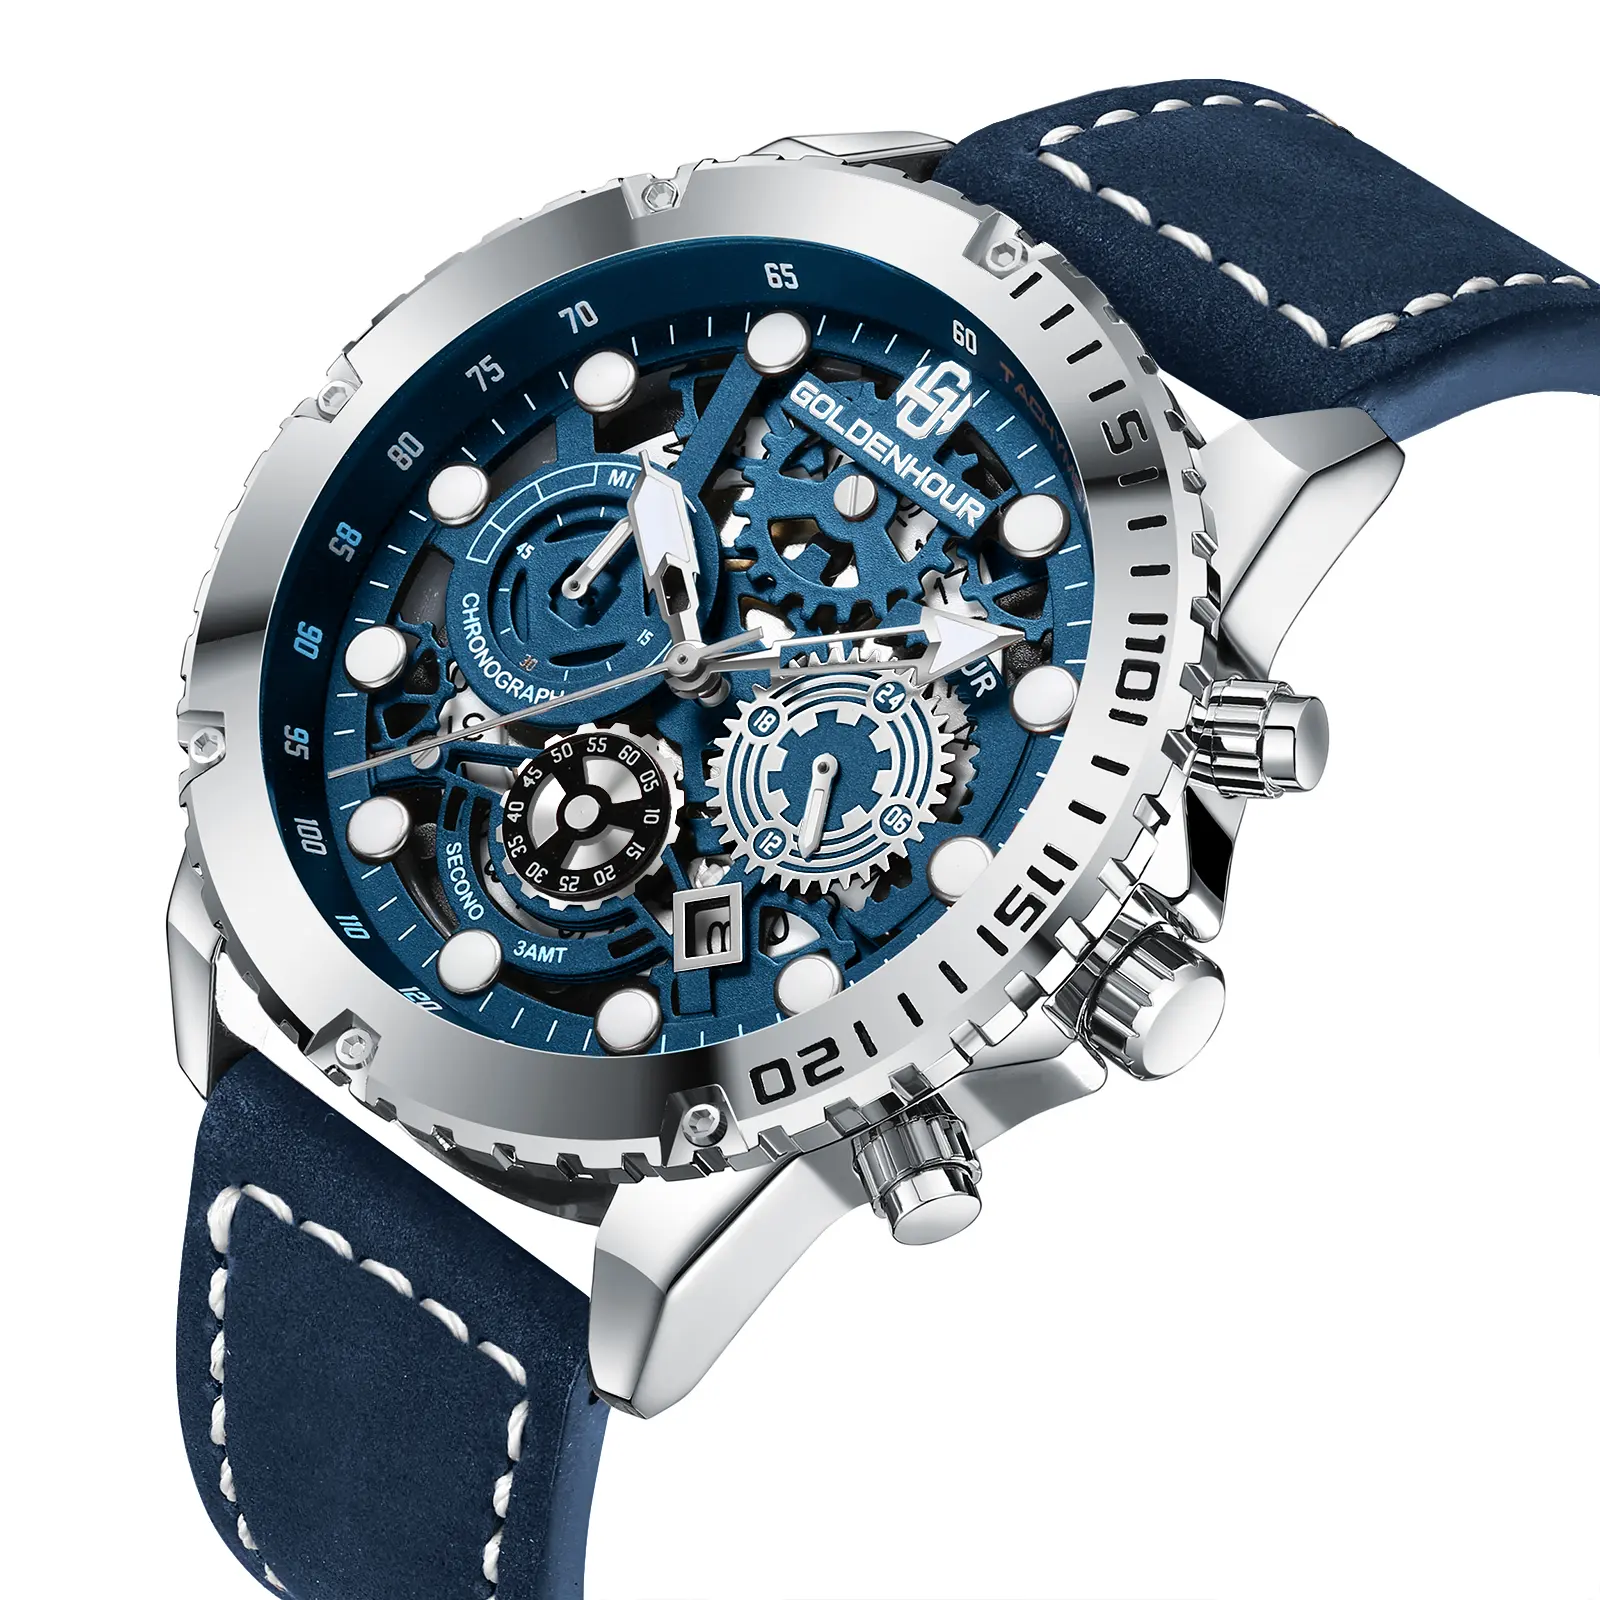 World Time Digital Men's Watches Fashion LED Digital Steel Sport Quality Branded Waterproof Wristwatch